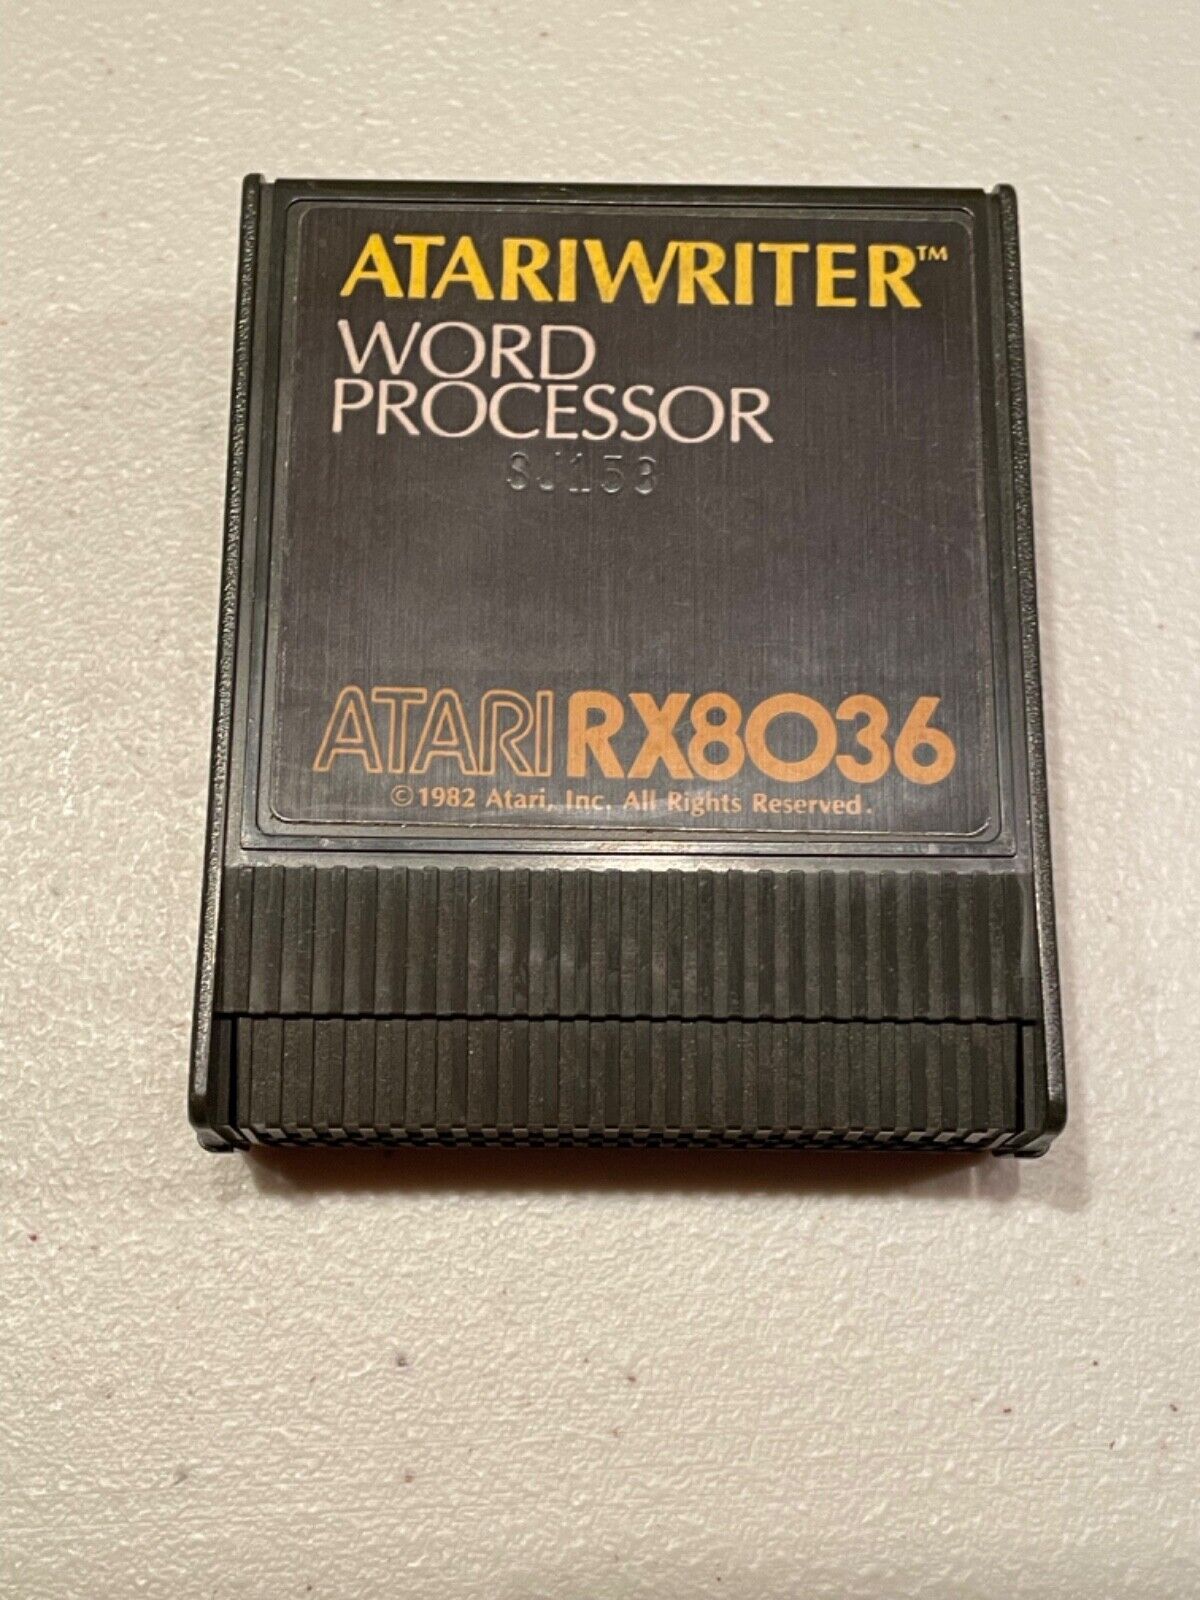 Vintage Atari 400/800 Atariwriter Word Processor cartridge